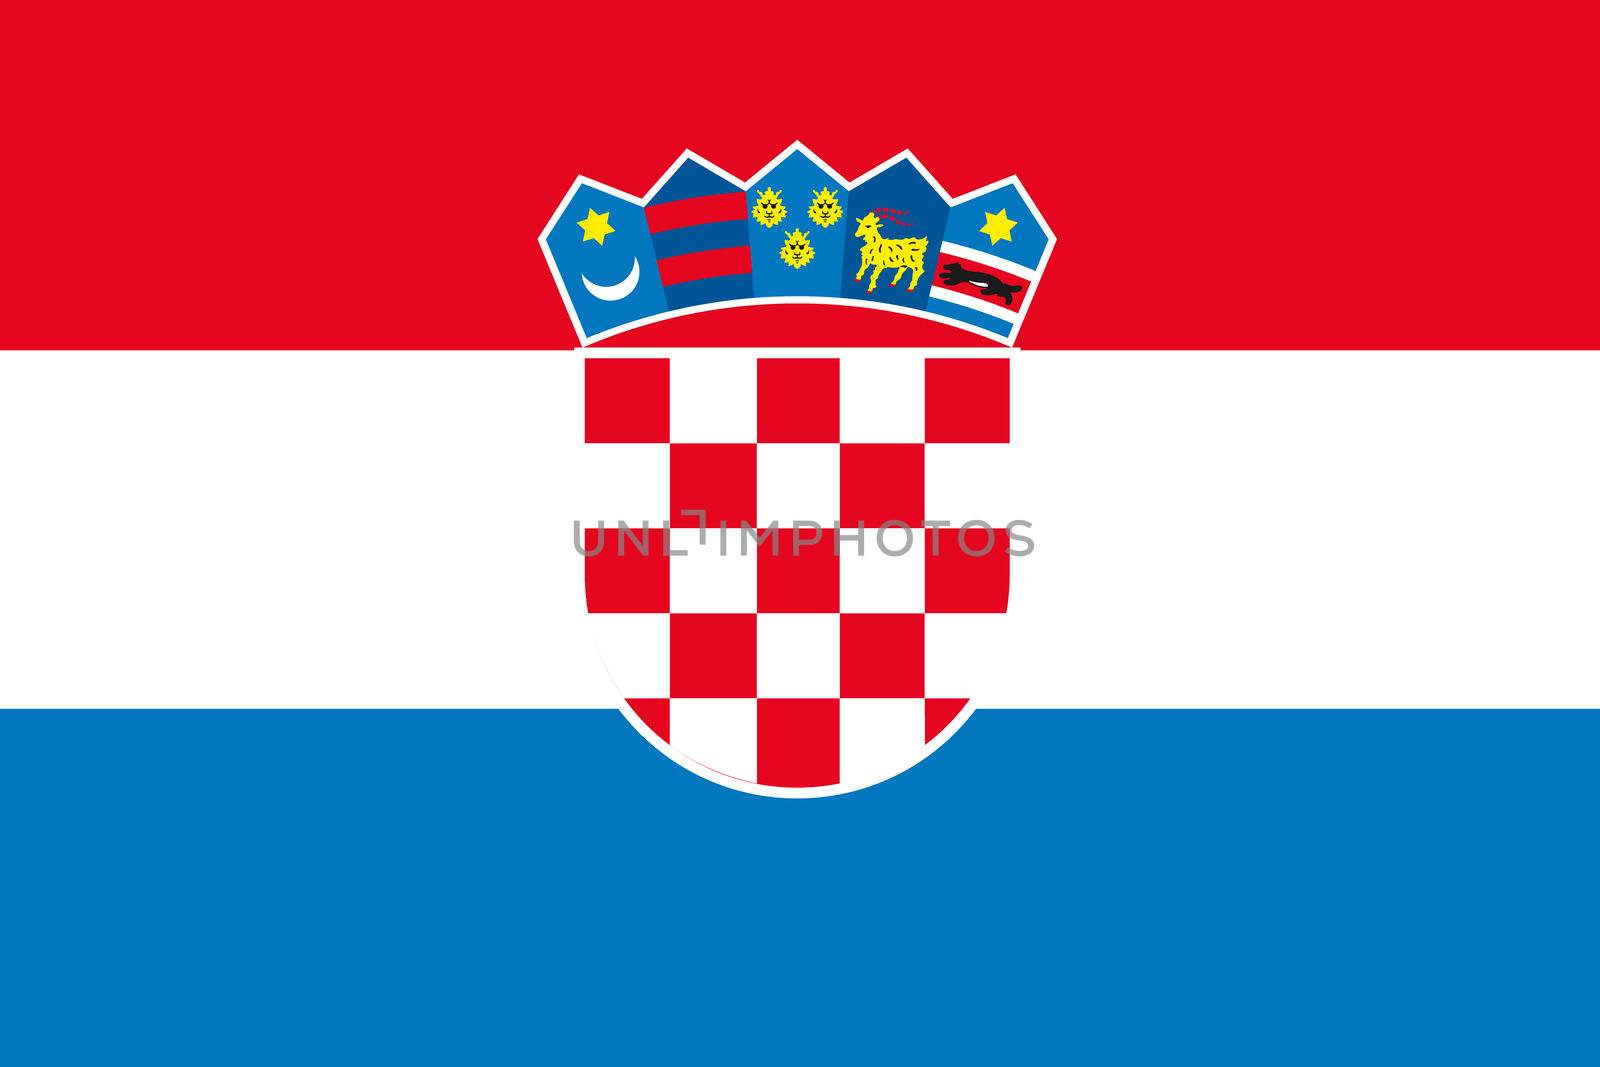 An illustration of the flag of Croatia